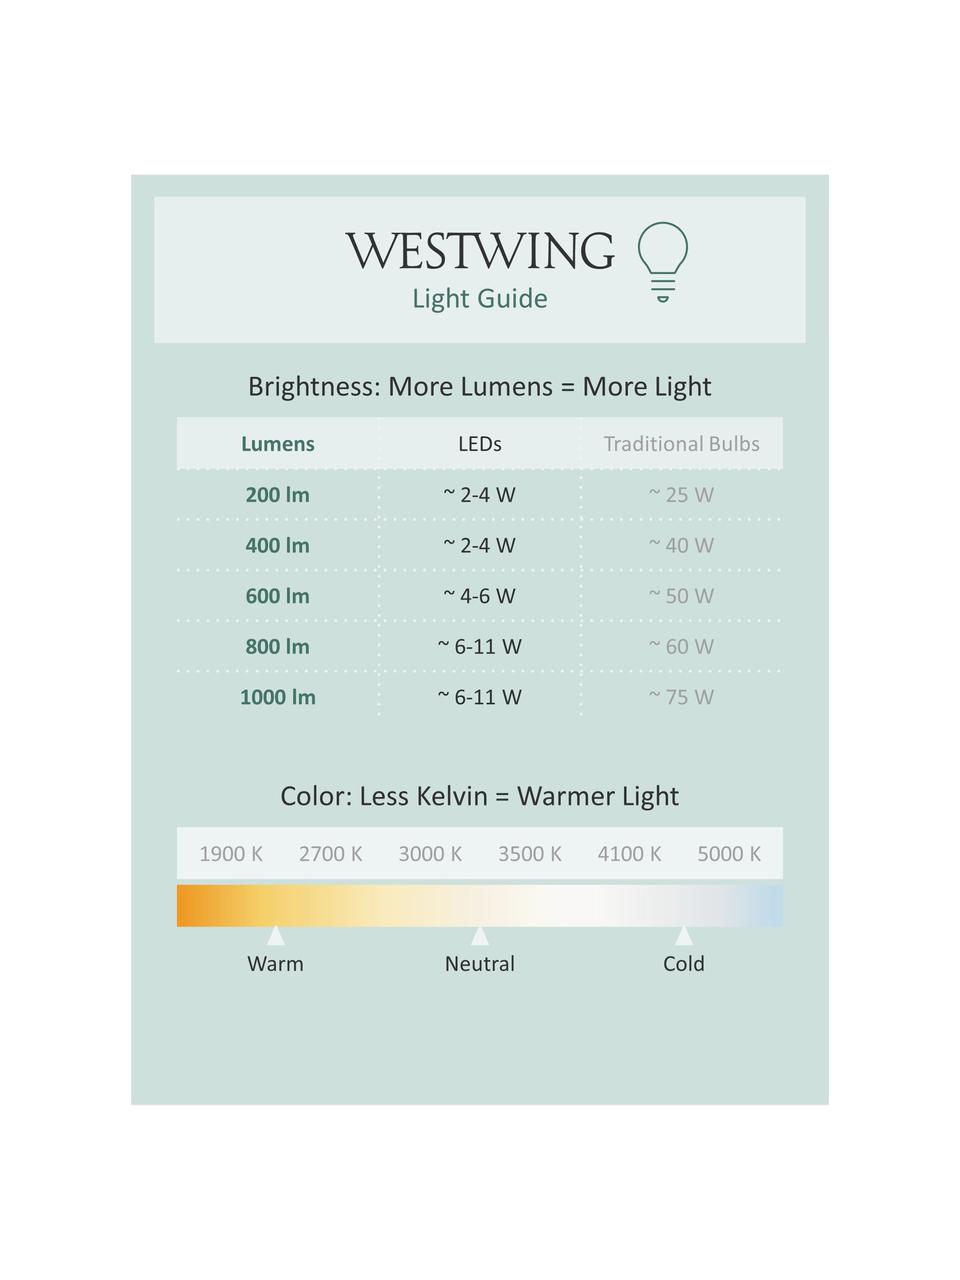 Lampadina E27, luce regolabile, bianco caldo, 1 pz, Lampadina: vetro, Base lampadina: alluminio, Bianco, Ø 15 x Alt. 19 cm